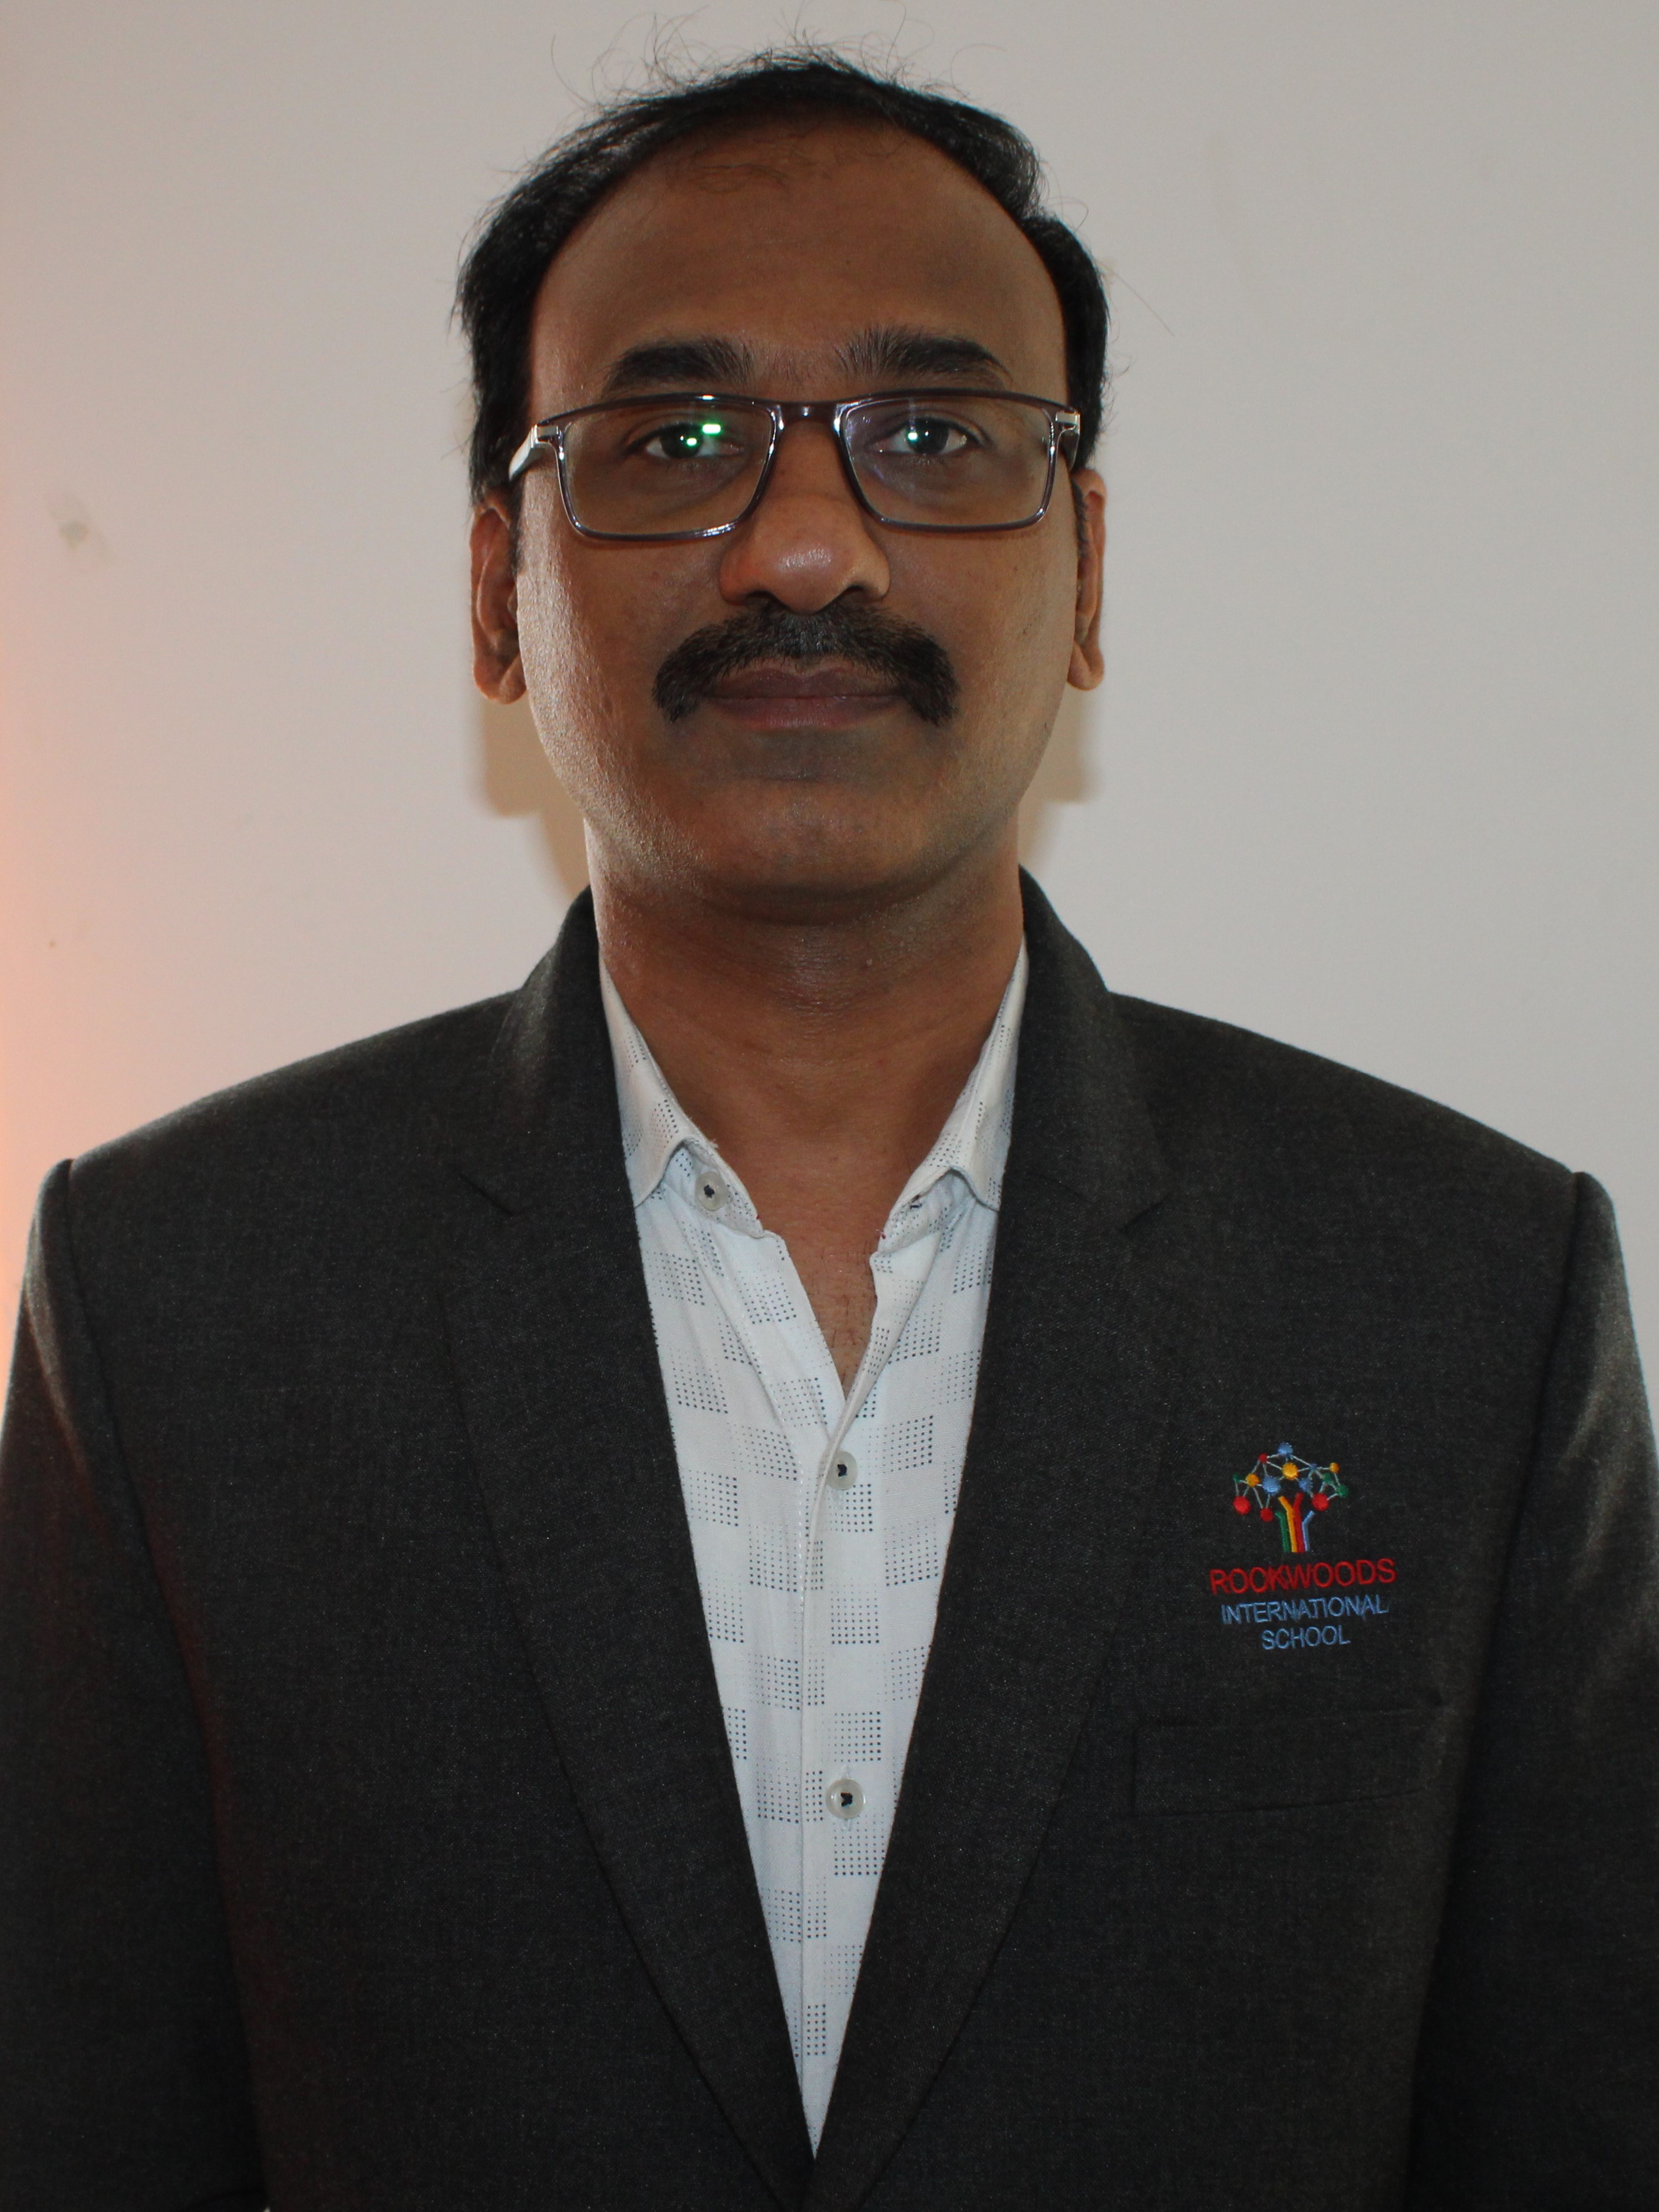 Mr Thummalapalli Naresh Kumar